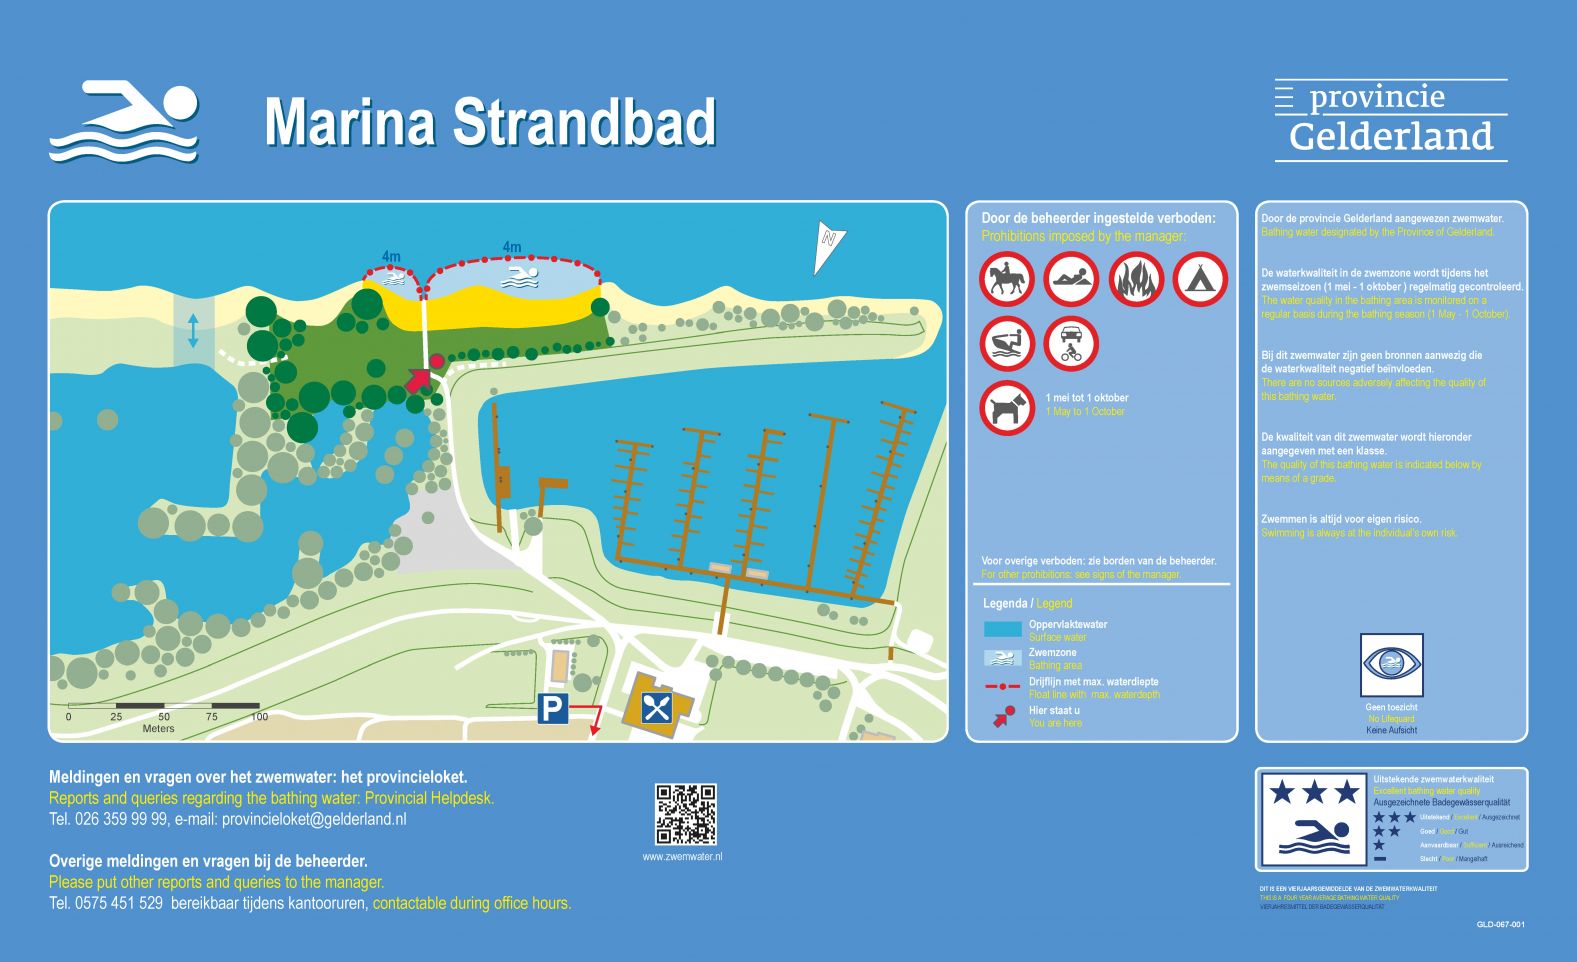 The information board at the swimming location Marina Strandbad